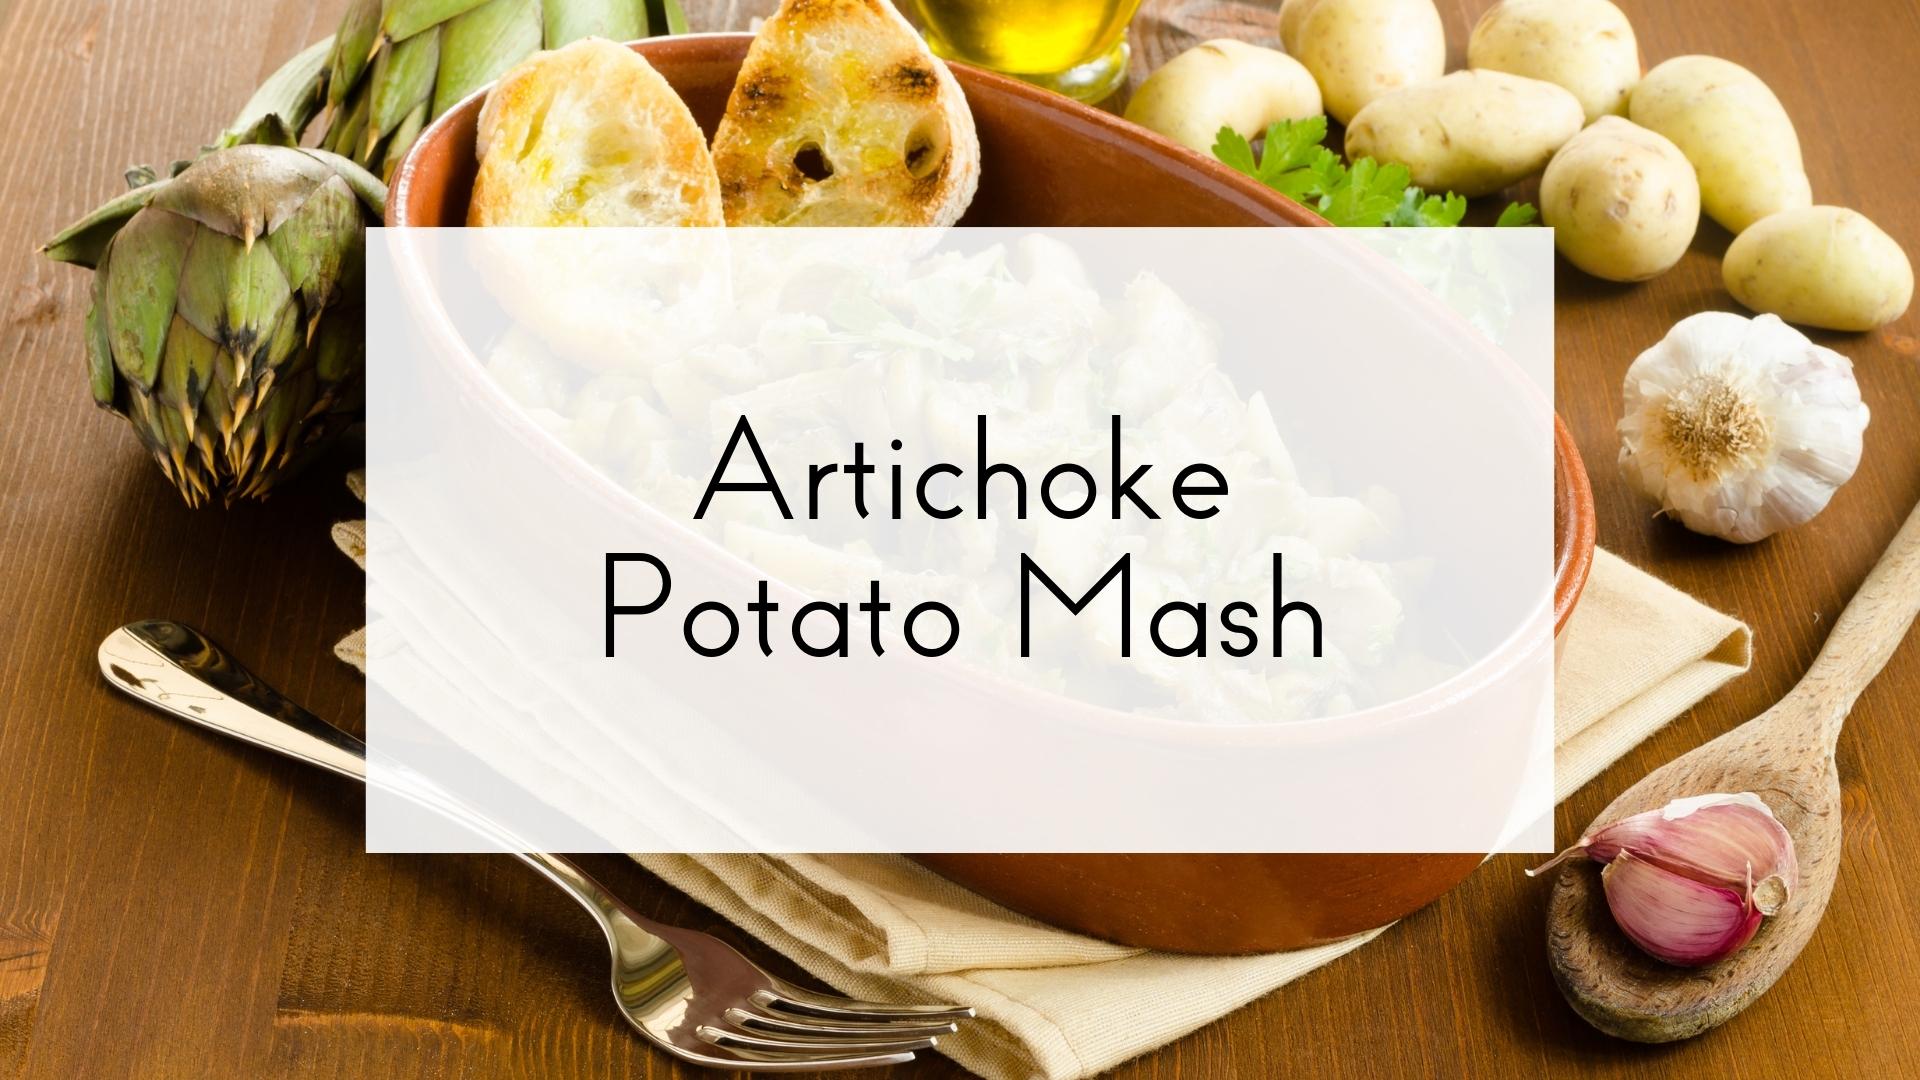 Artichoke Potato Mash